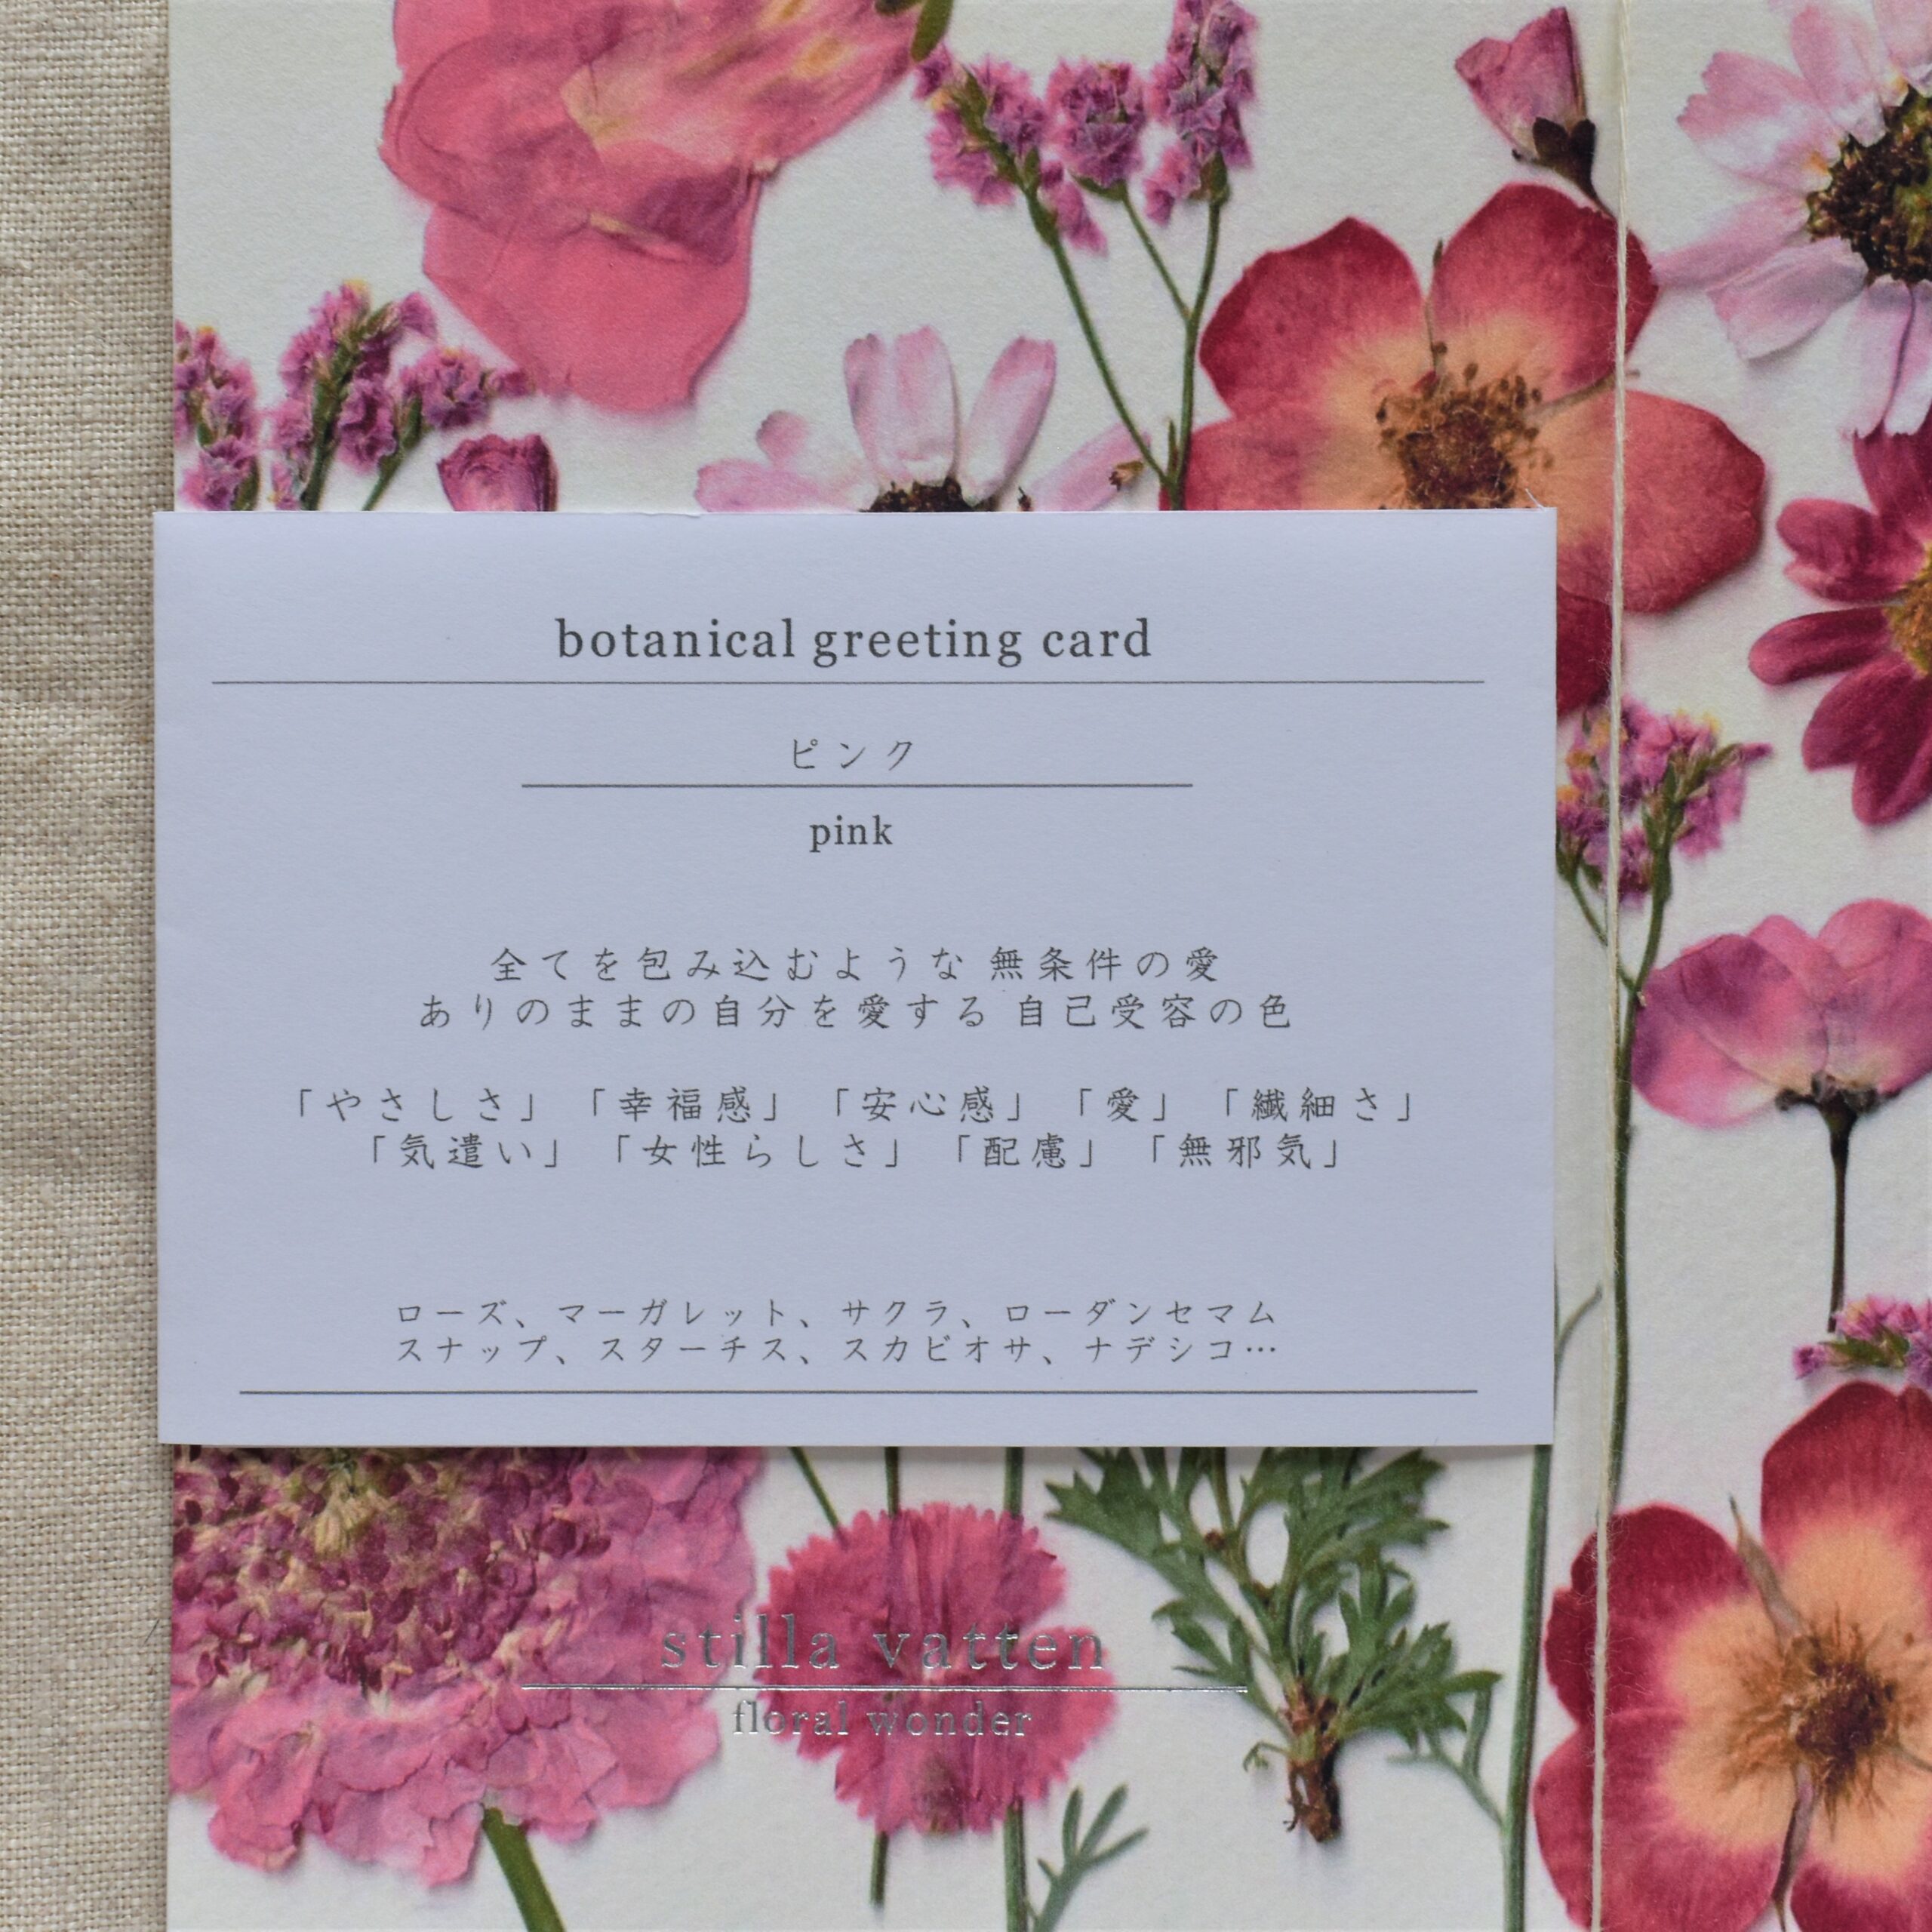 Botanical Greeting Card ピンク 花言葉メッセージカード Stilla Vatten Floral Wonder